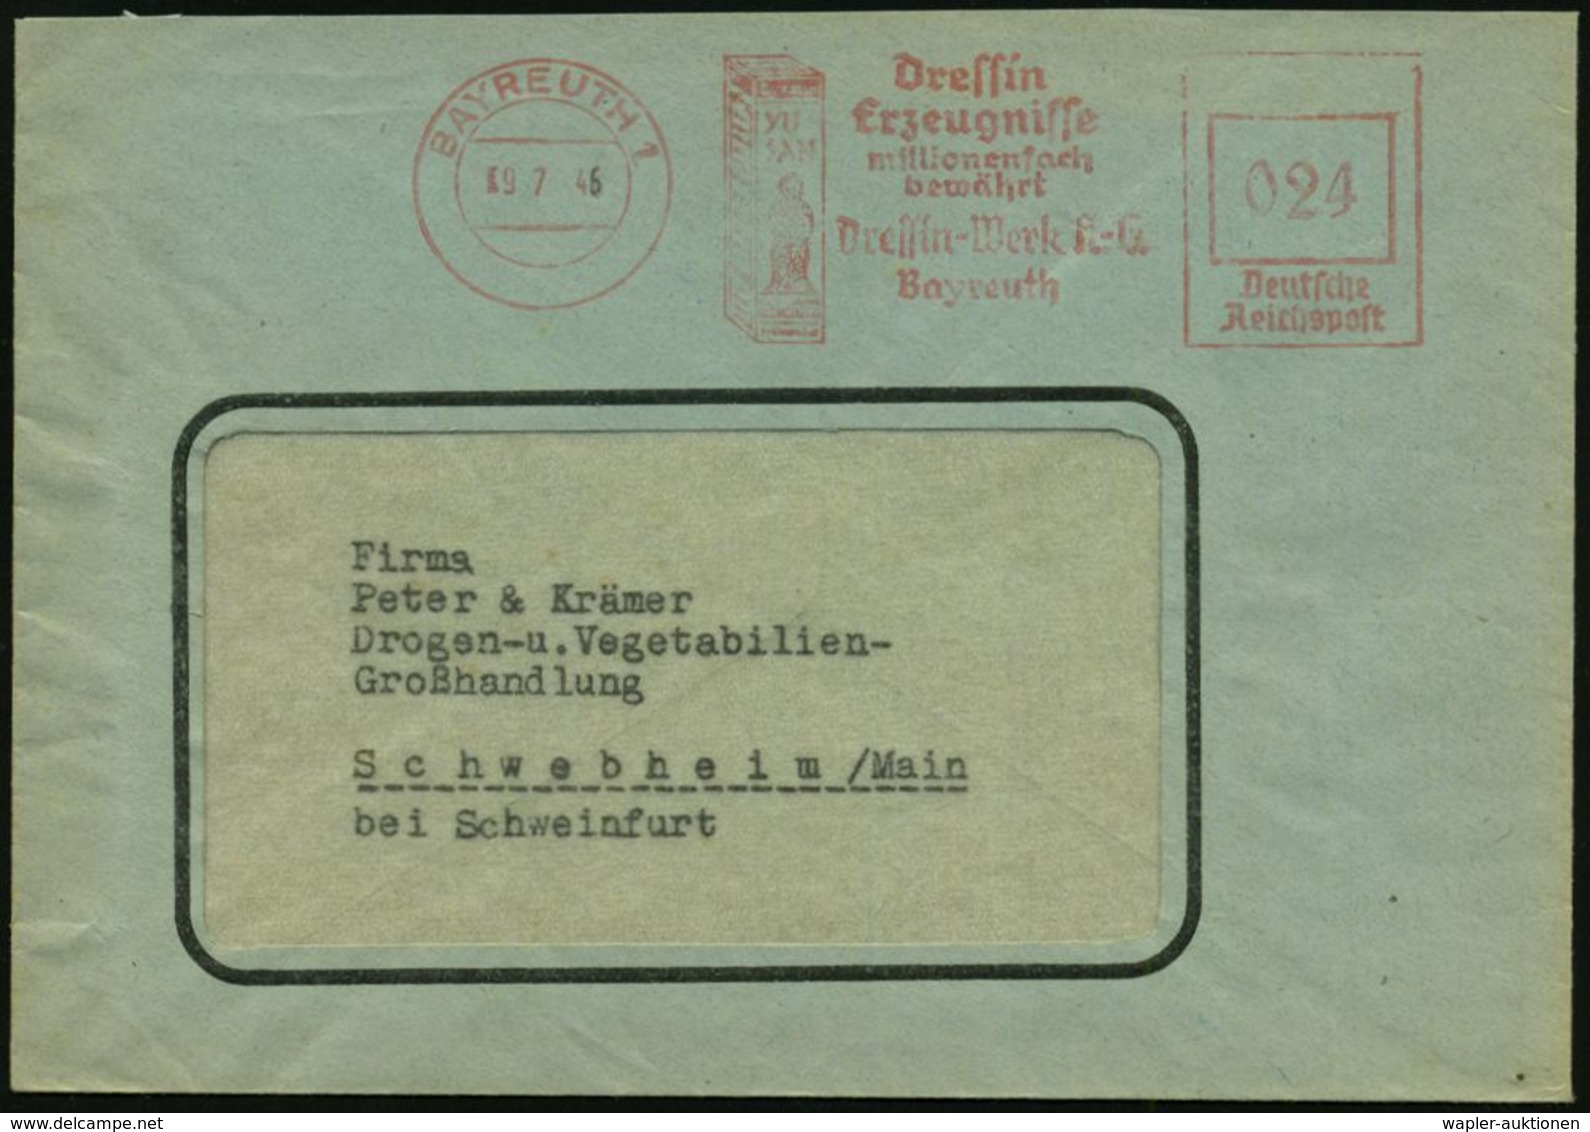 HAAR / BART / RASUR / FRISEUR : BAYREUTH 1/ YU SAN/ Dressin/ Erzeugnisse../ Dressin-Werke K.G. 1945 (9.7.) Aptierter AFS - Pharmacie